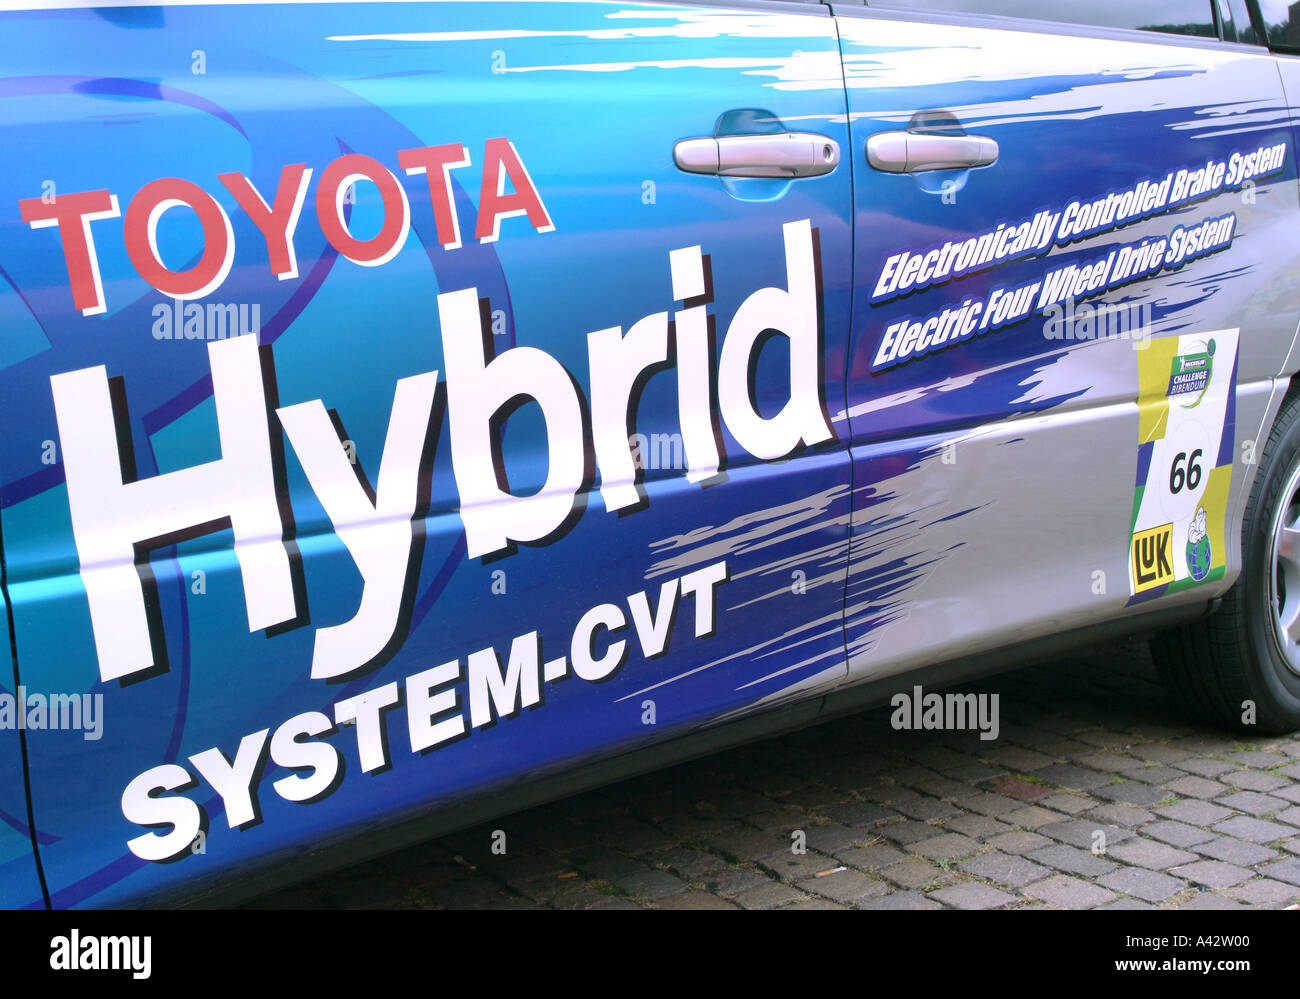 Hybrid propelled car of Toyota Hybrid angetriebenes Auto von Toyota Stock Photo